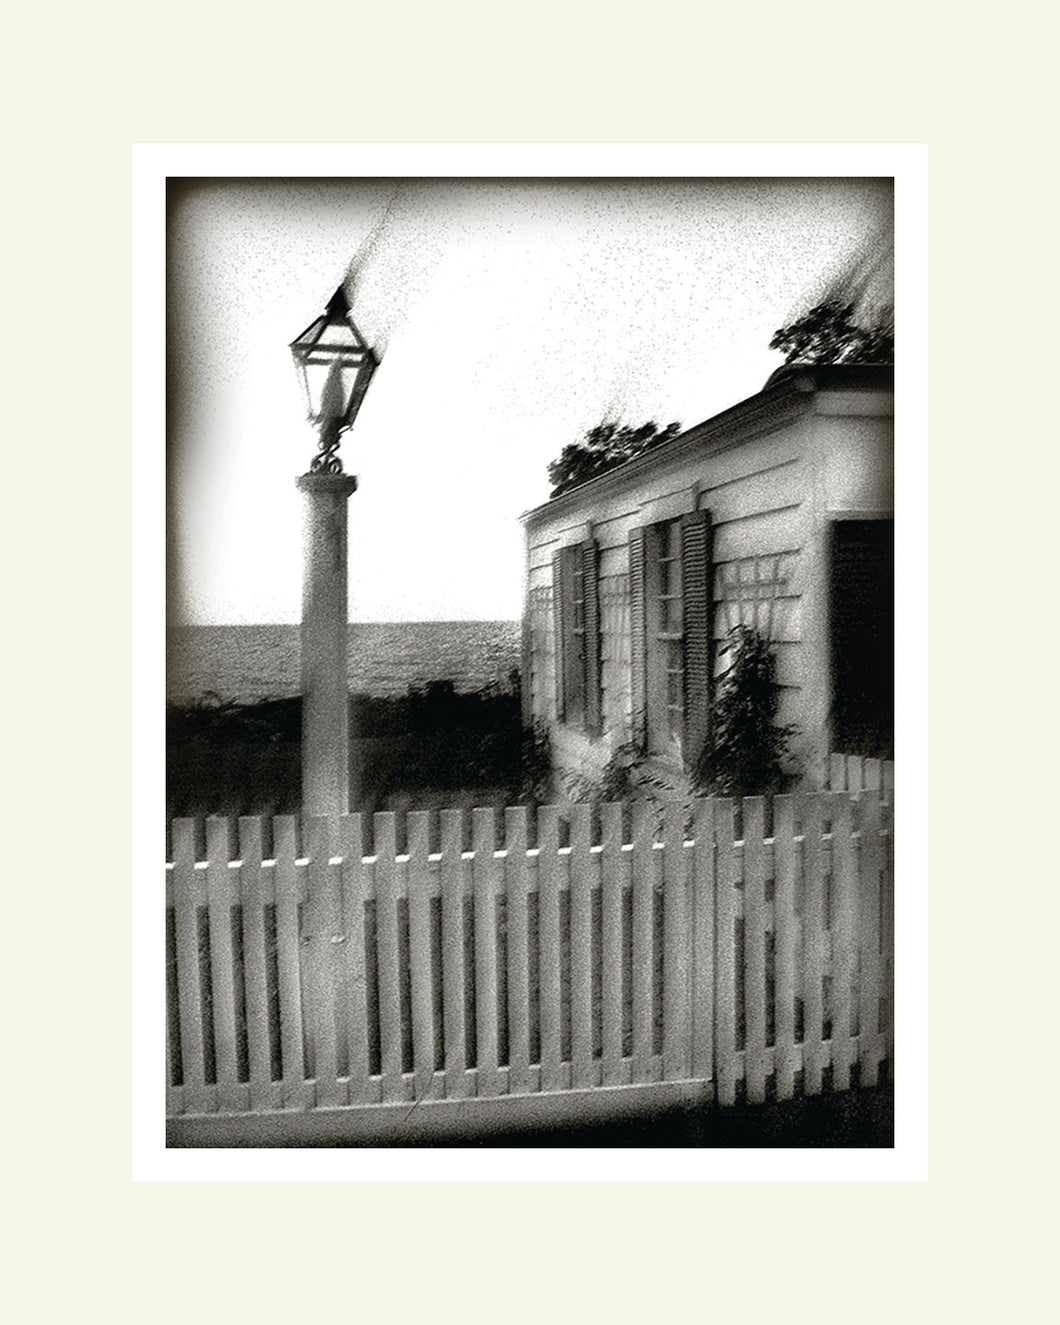 Worn Doorstep  - Black and White Archival Print